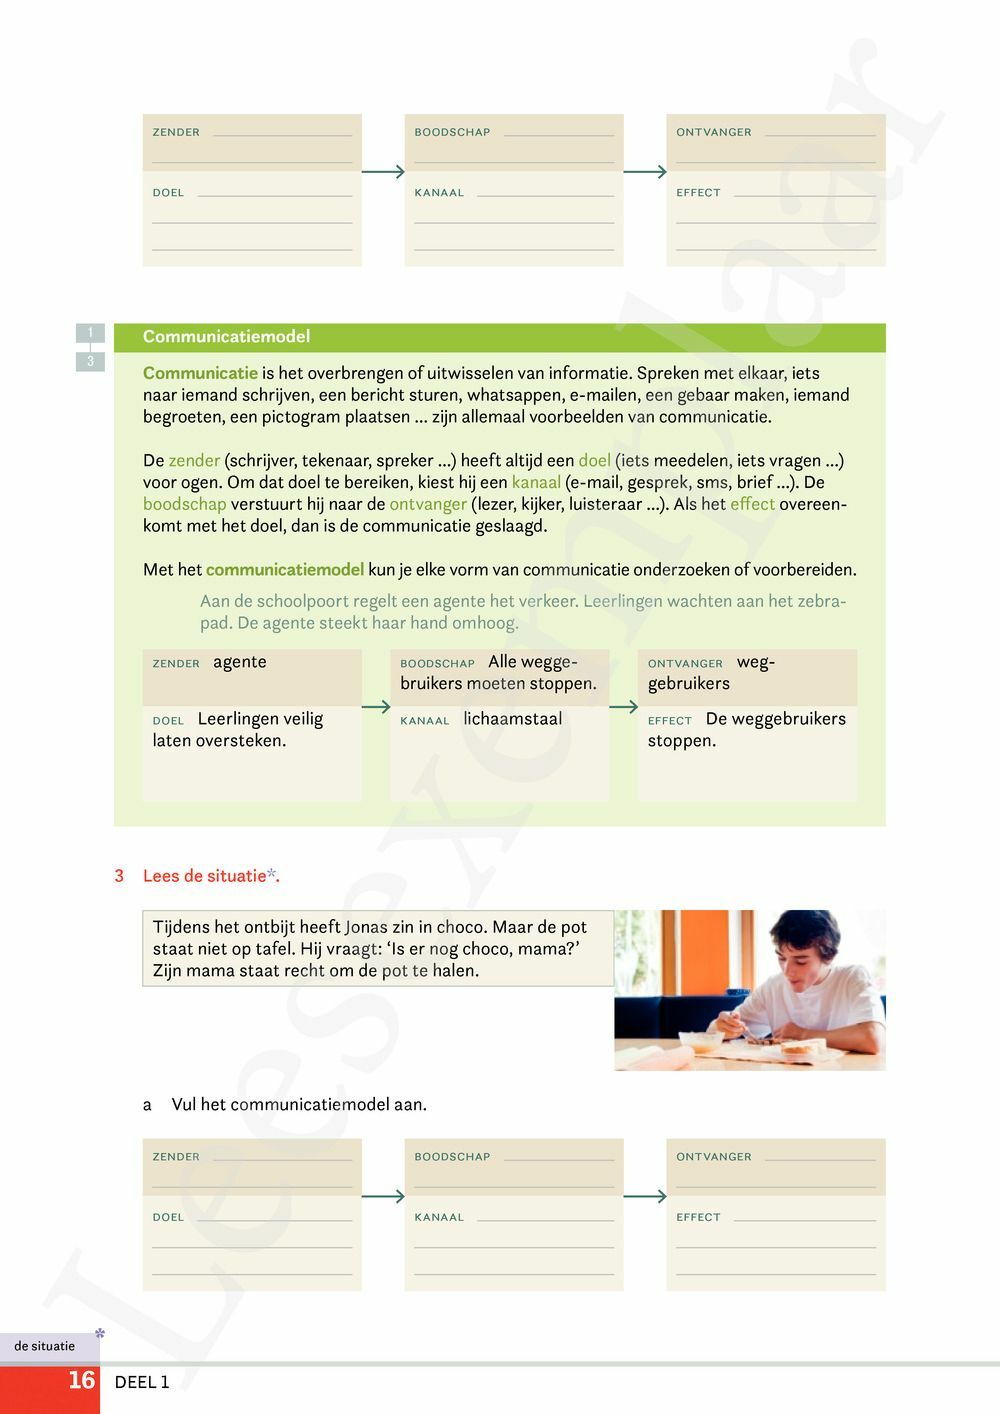 Preview: Campus Nederlands 1 Leerwerkboek Plus (incl. Pelckmans Portaal)